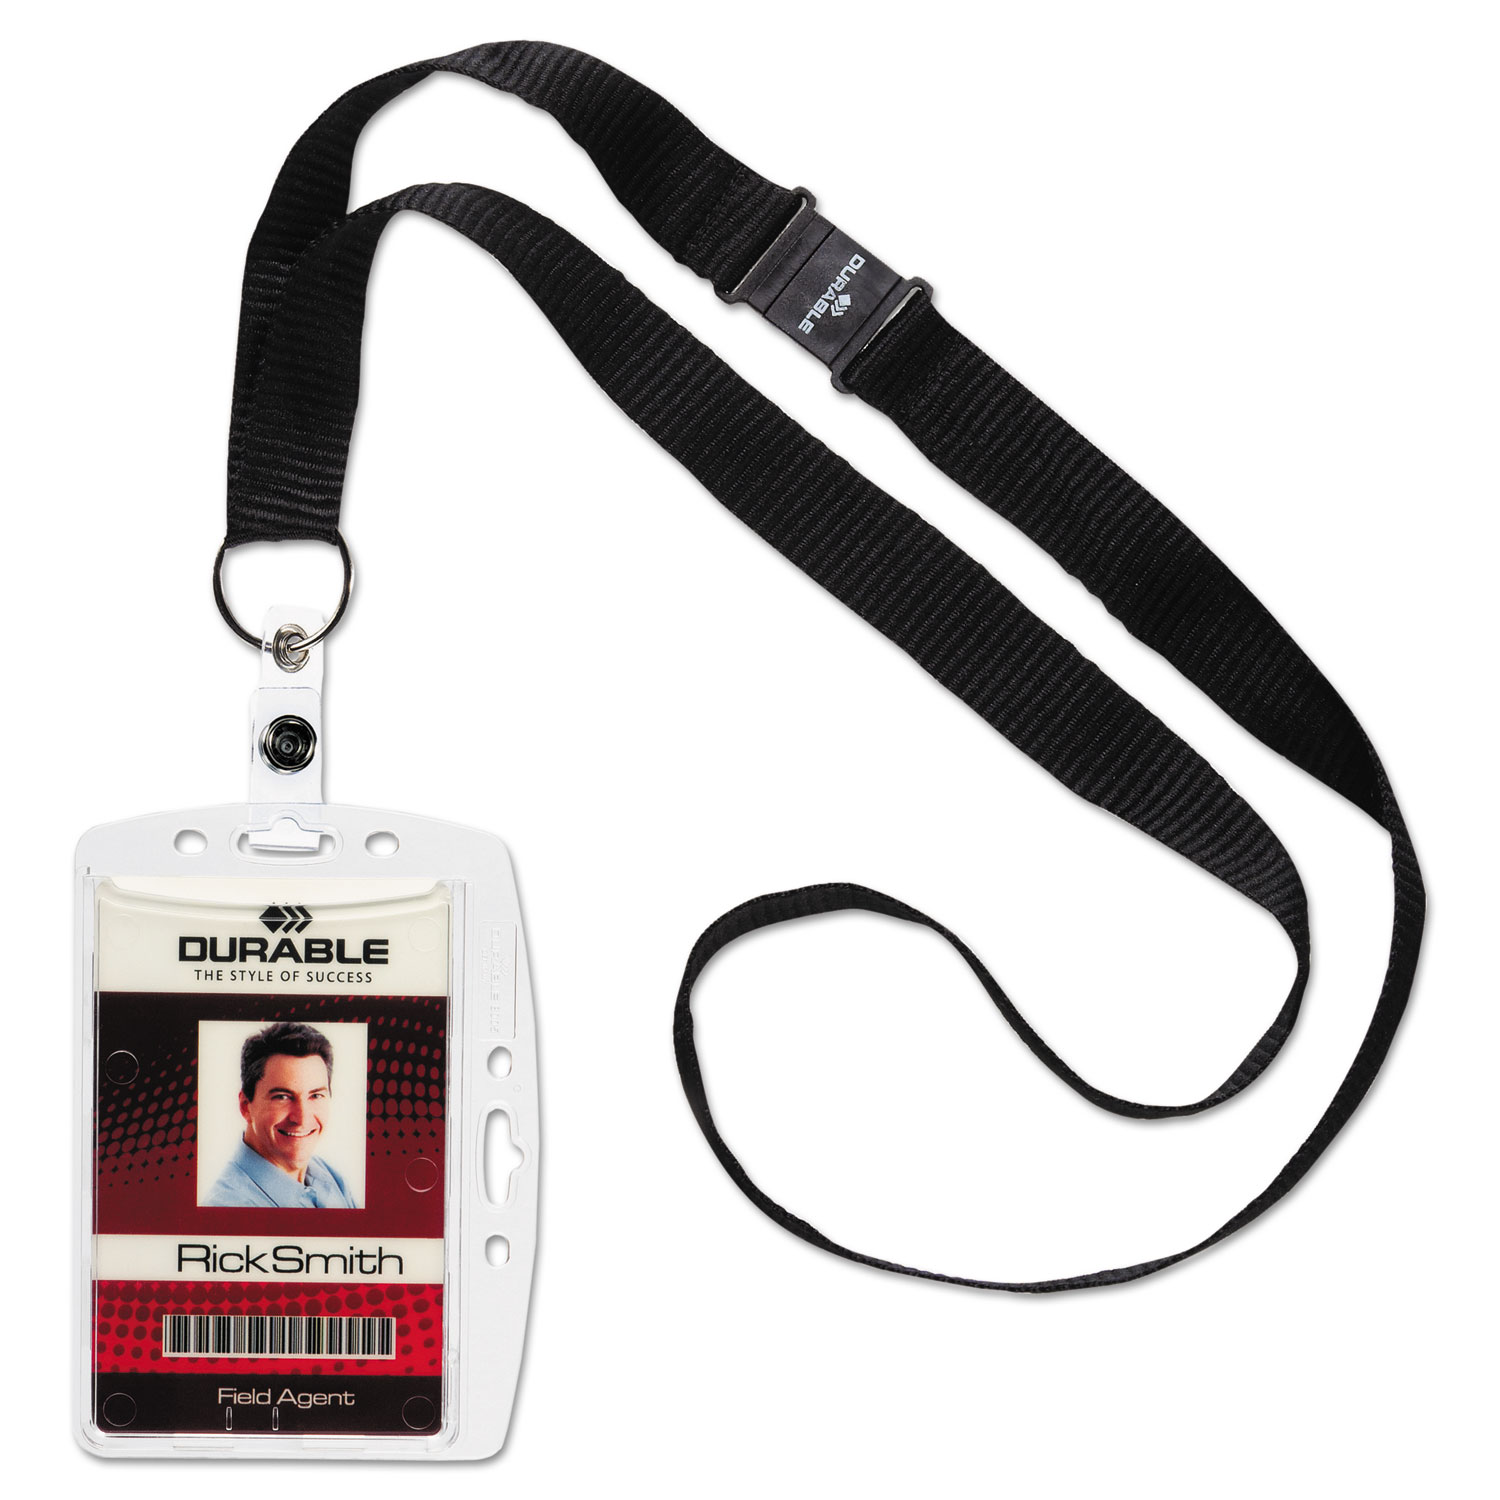 Lanyard With Horizontal ID Card Holder